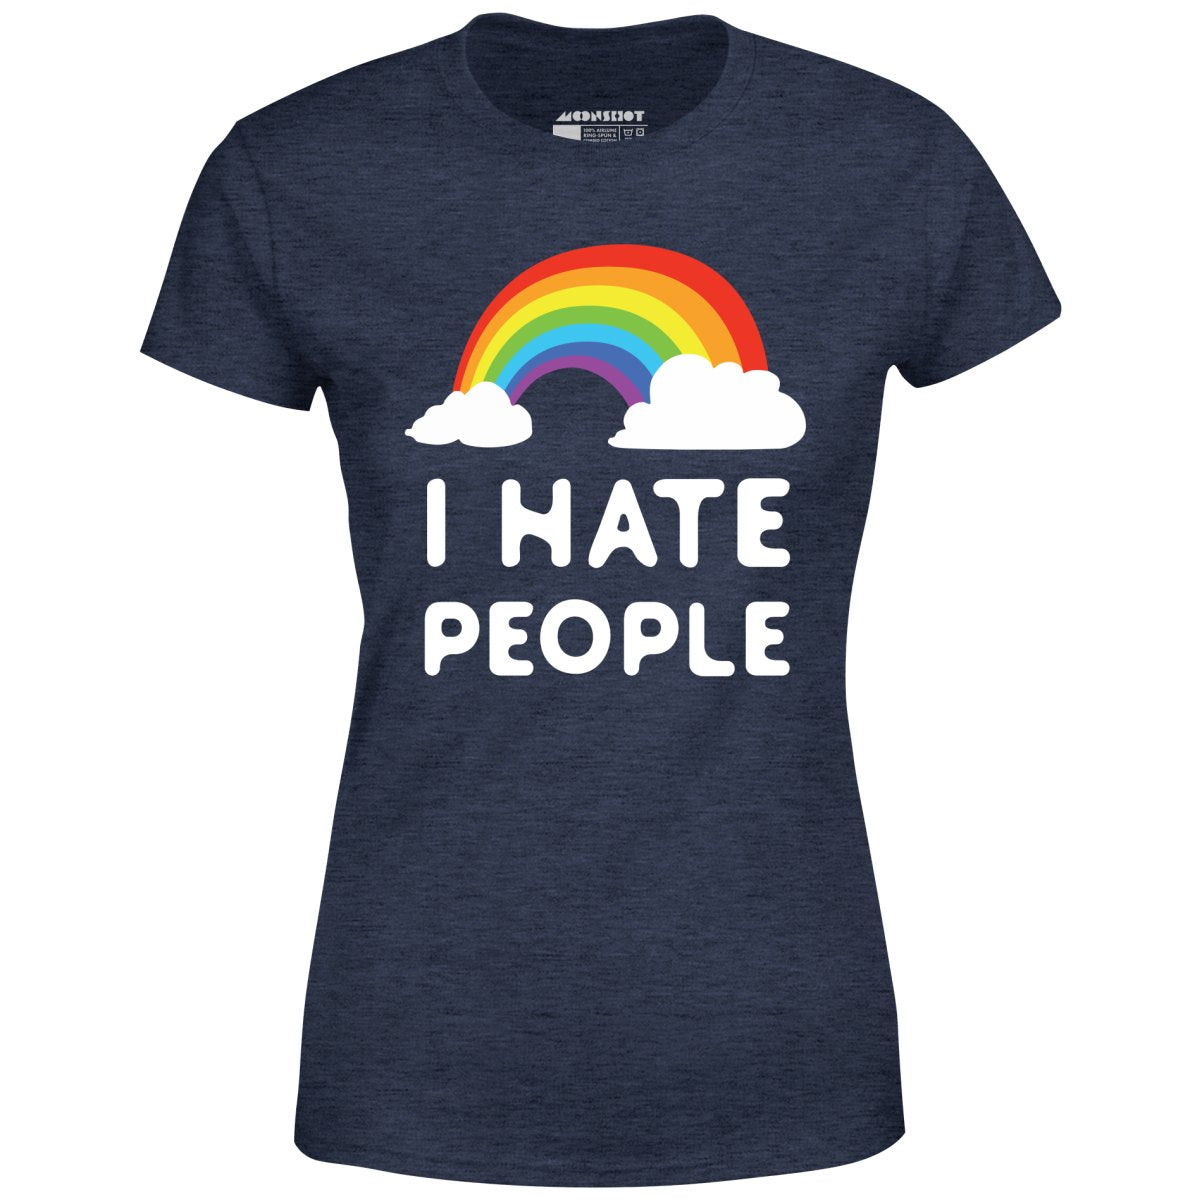 I Hate People - Women's T-Shirt